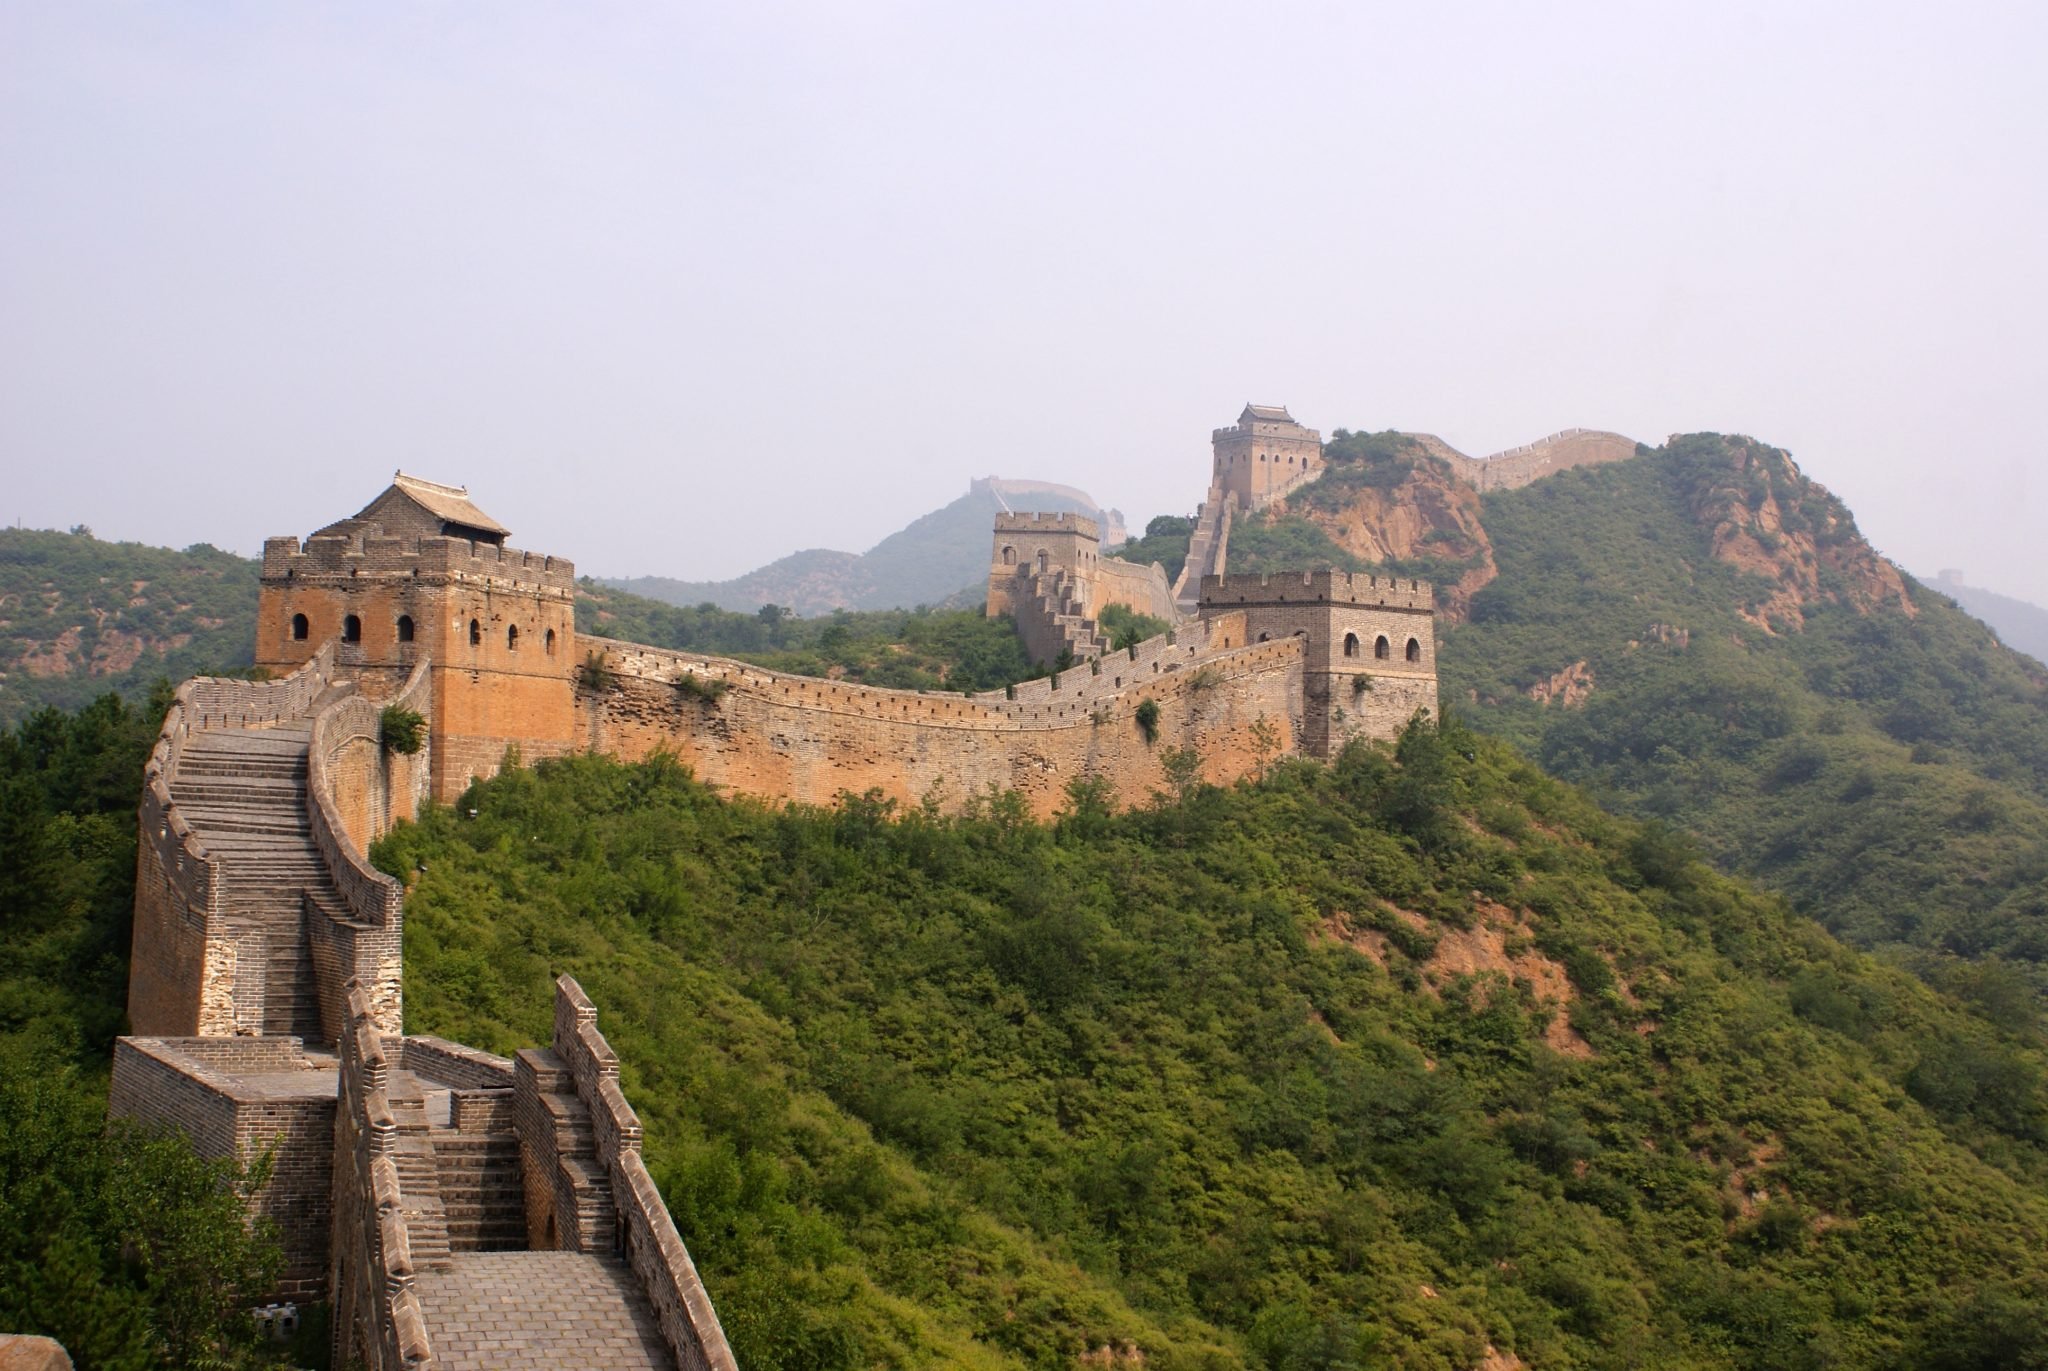 The great wall, China